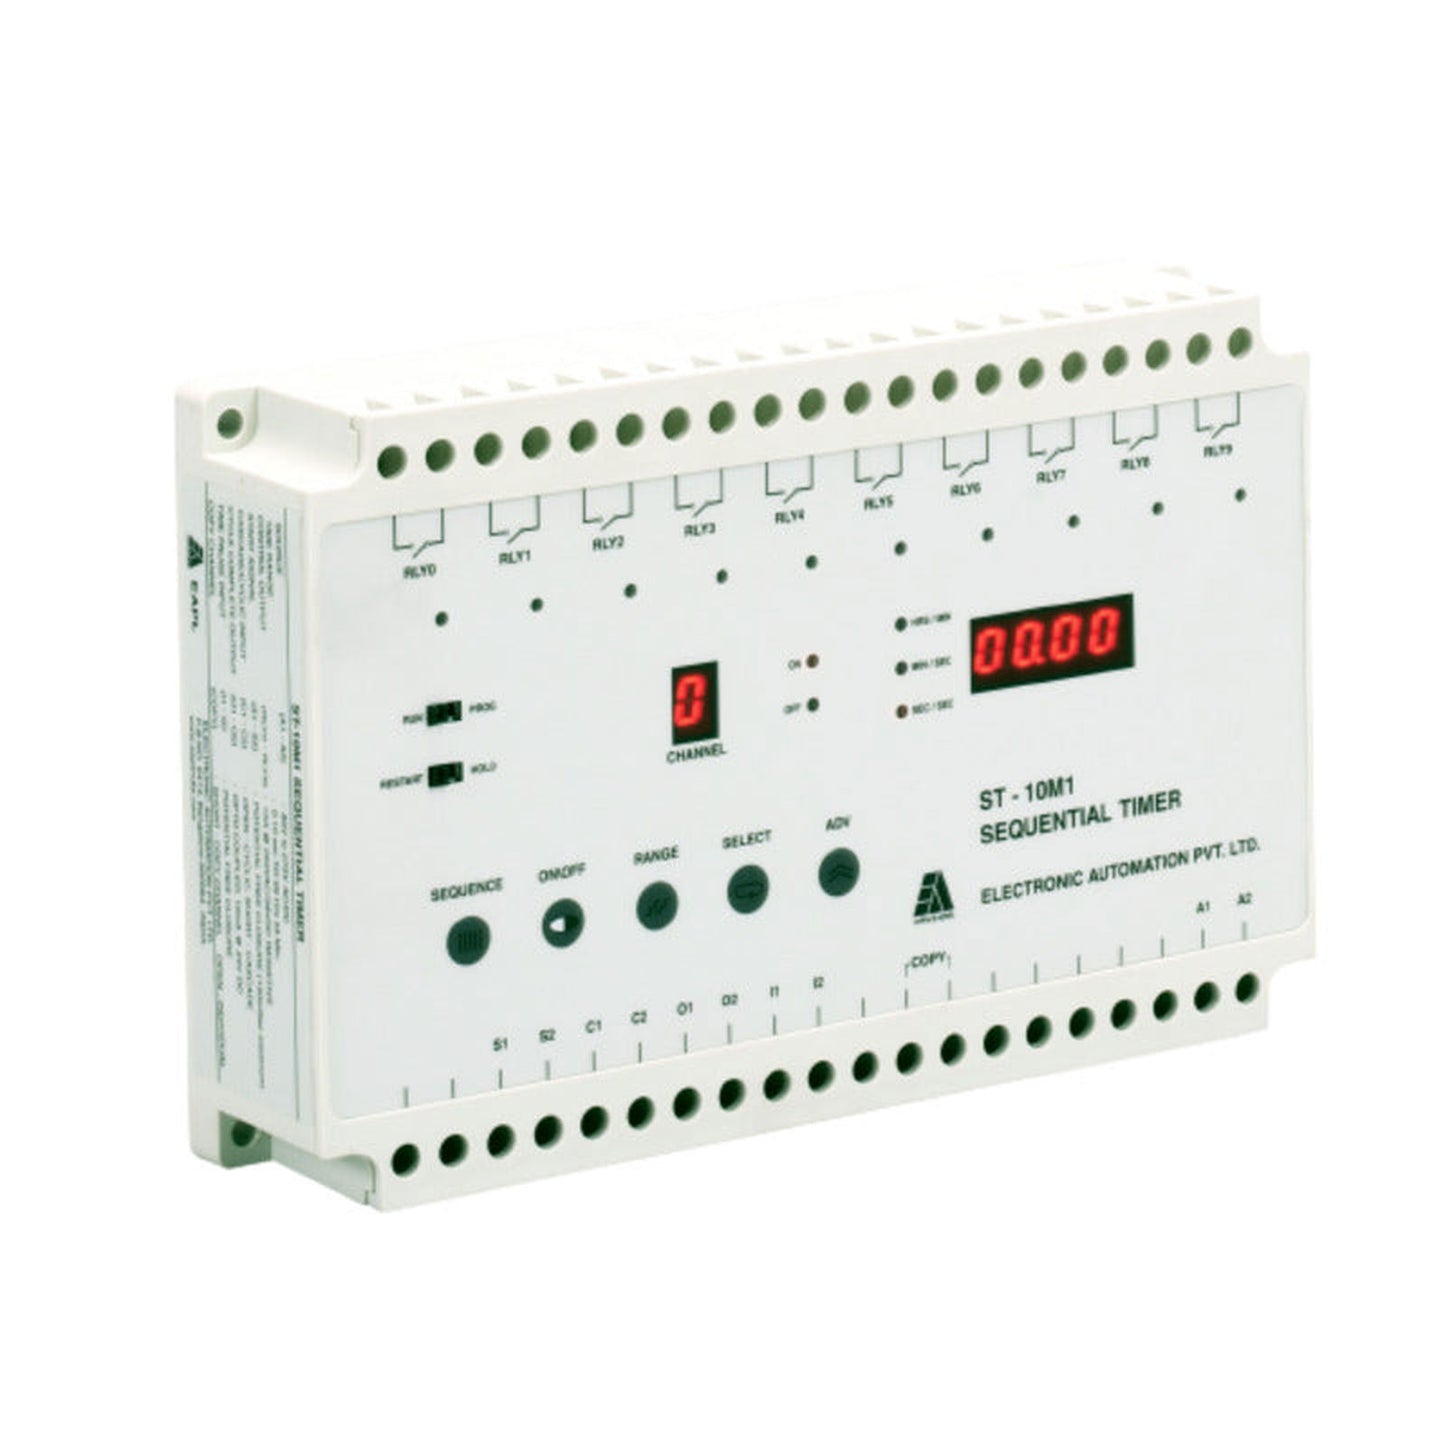 EAPL ST-10M1 Sequential Timer - voltkart - EAPL - 